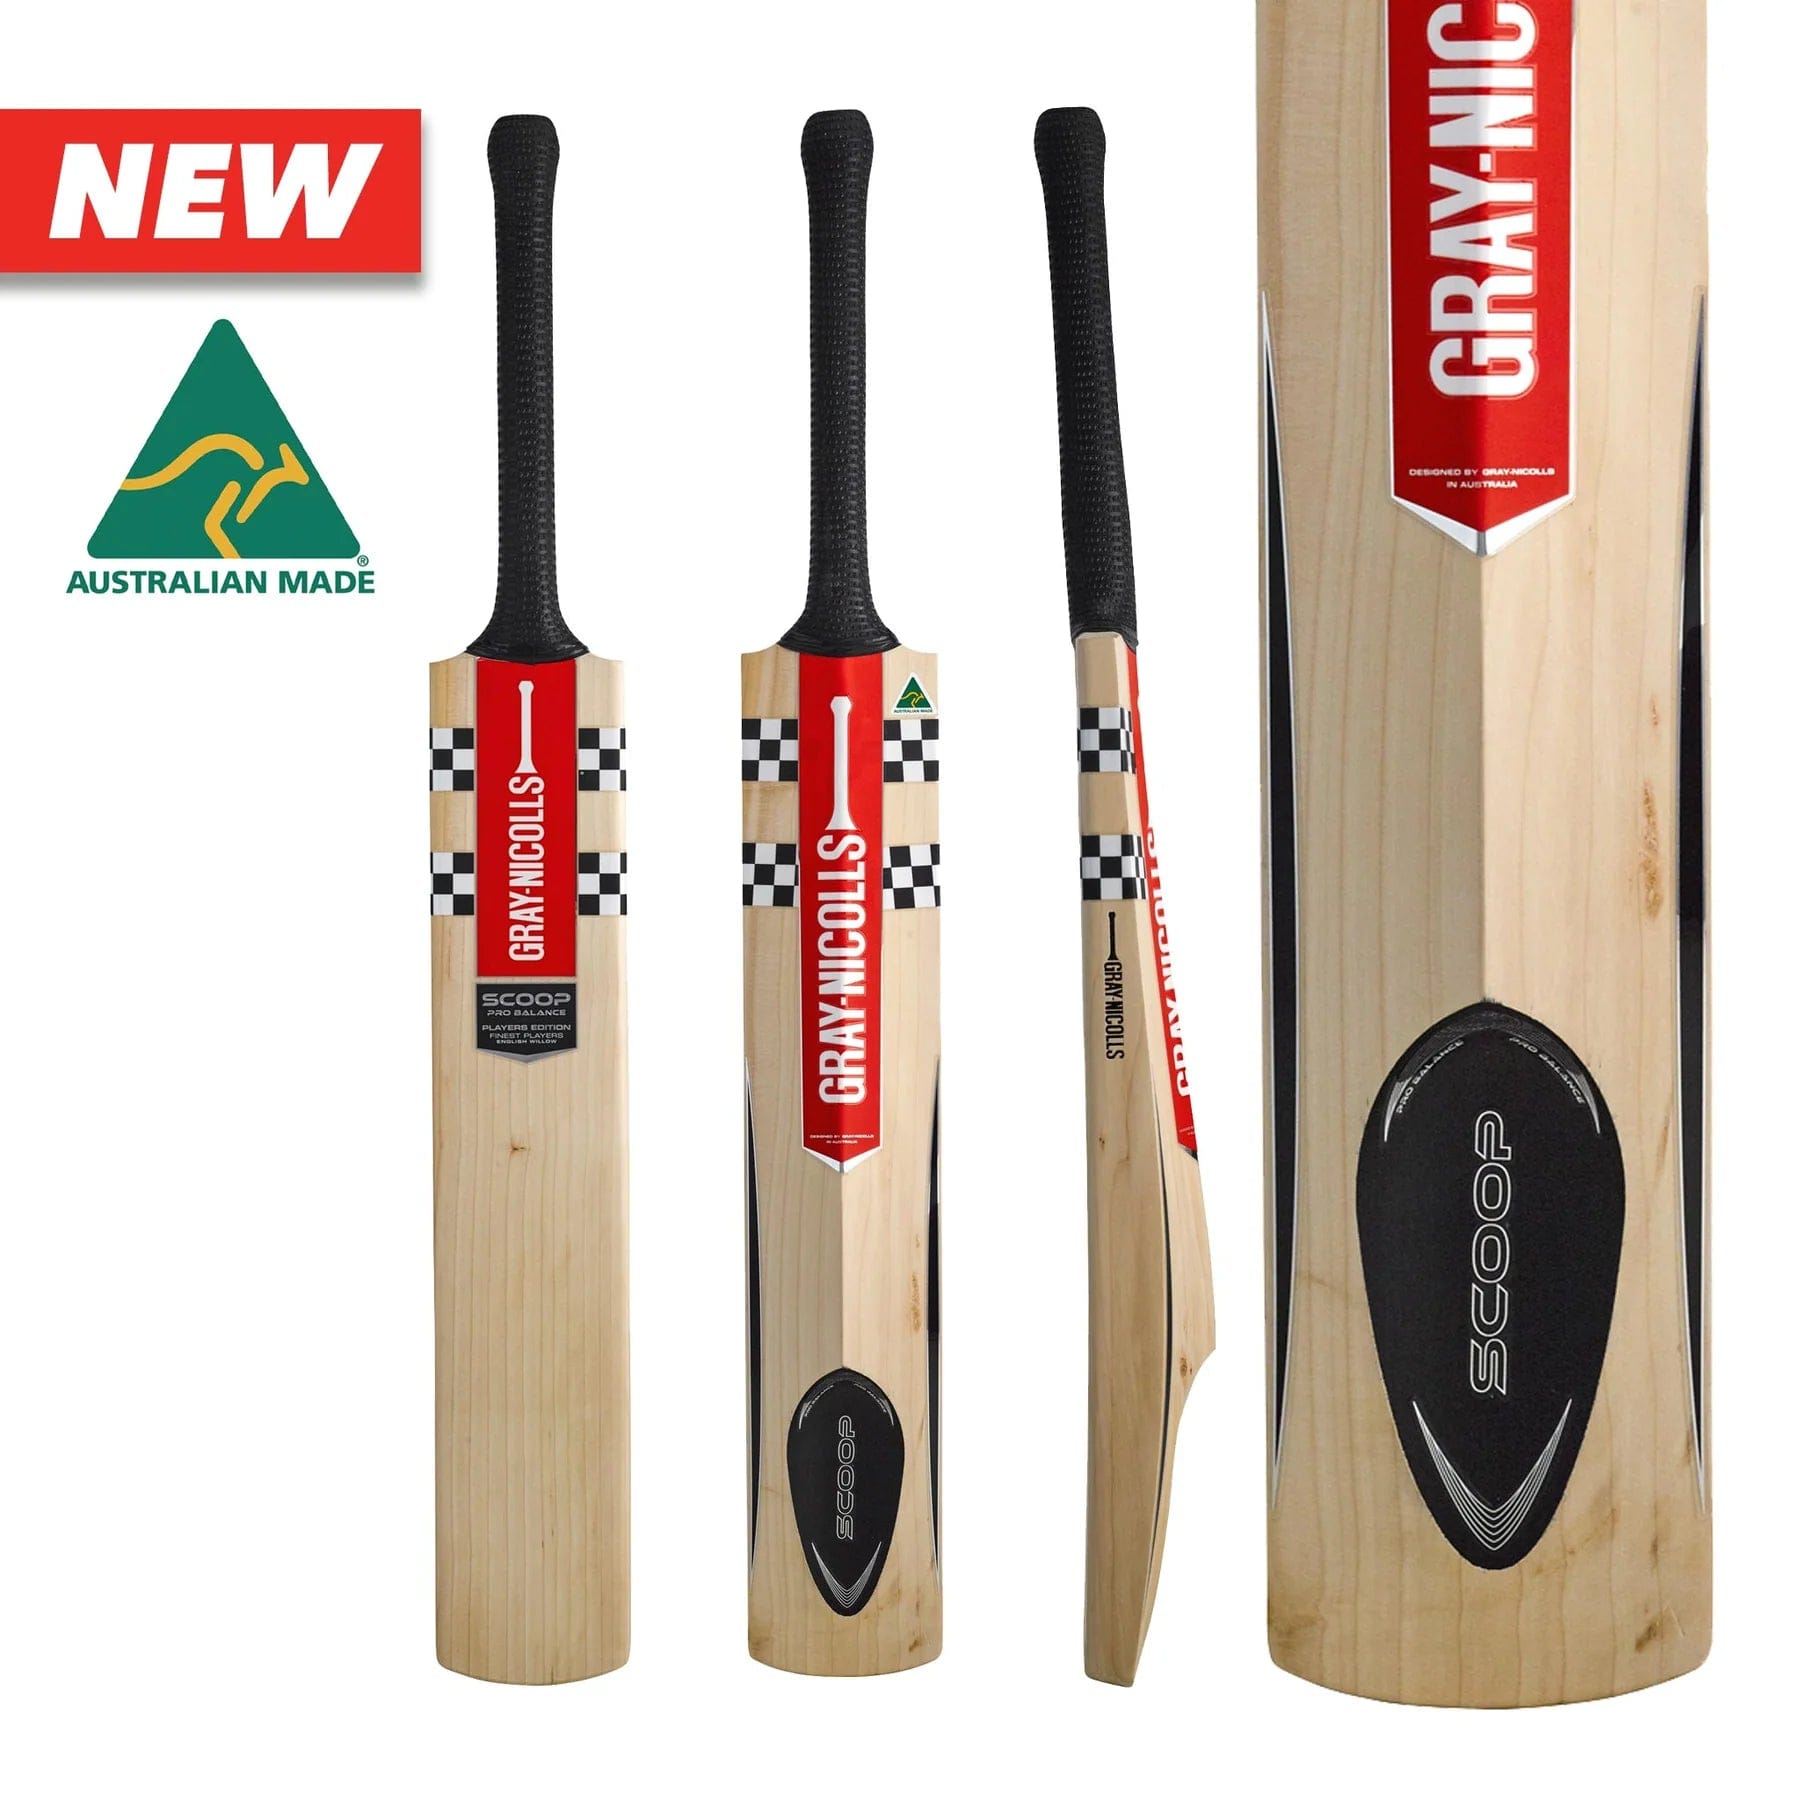 Gray Nicolls Cricket Bats Short Handle / 2'7-2'9 GN-Scoop Pro Balance Players Edition Bat (Natural)